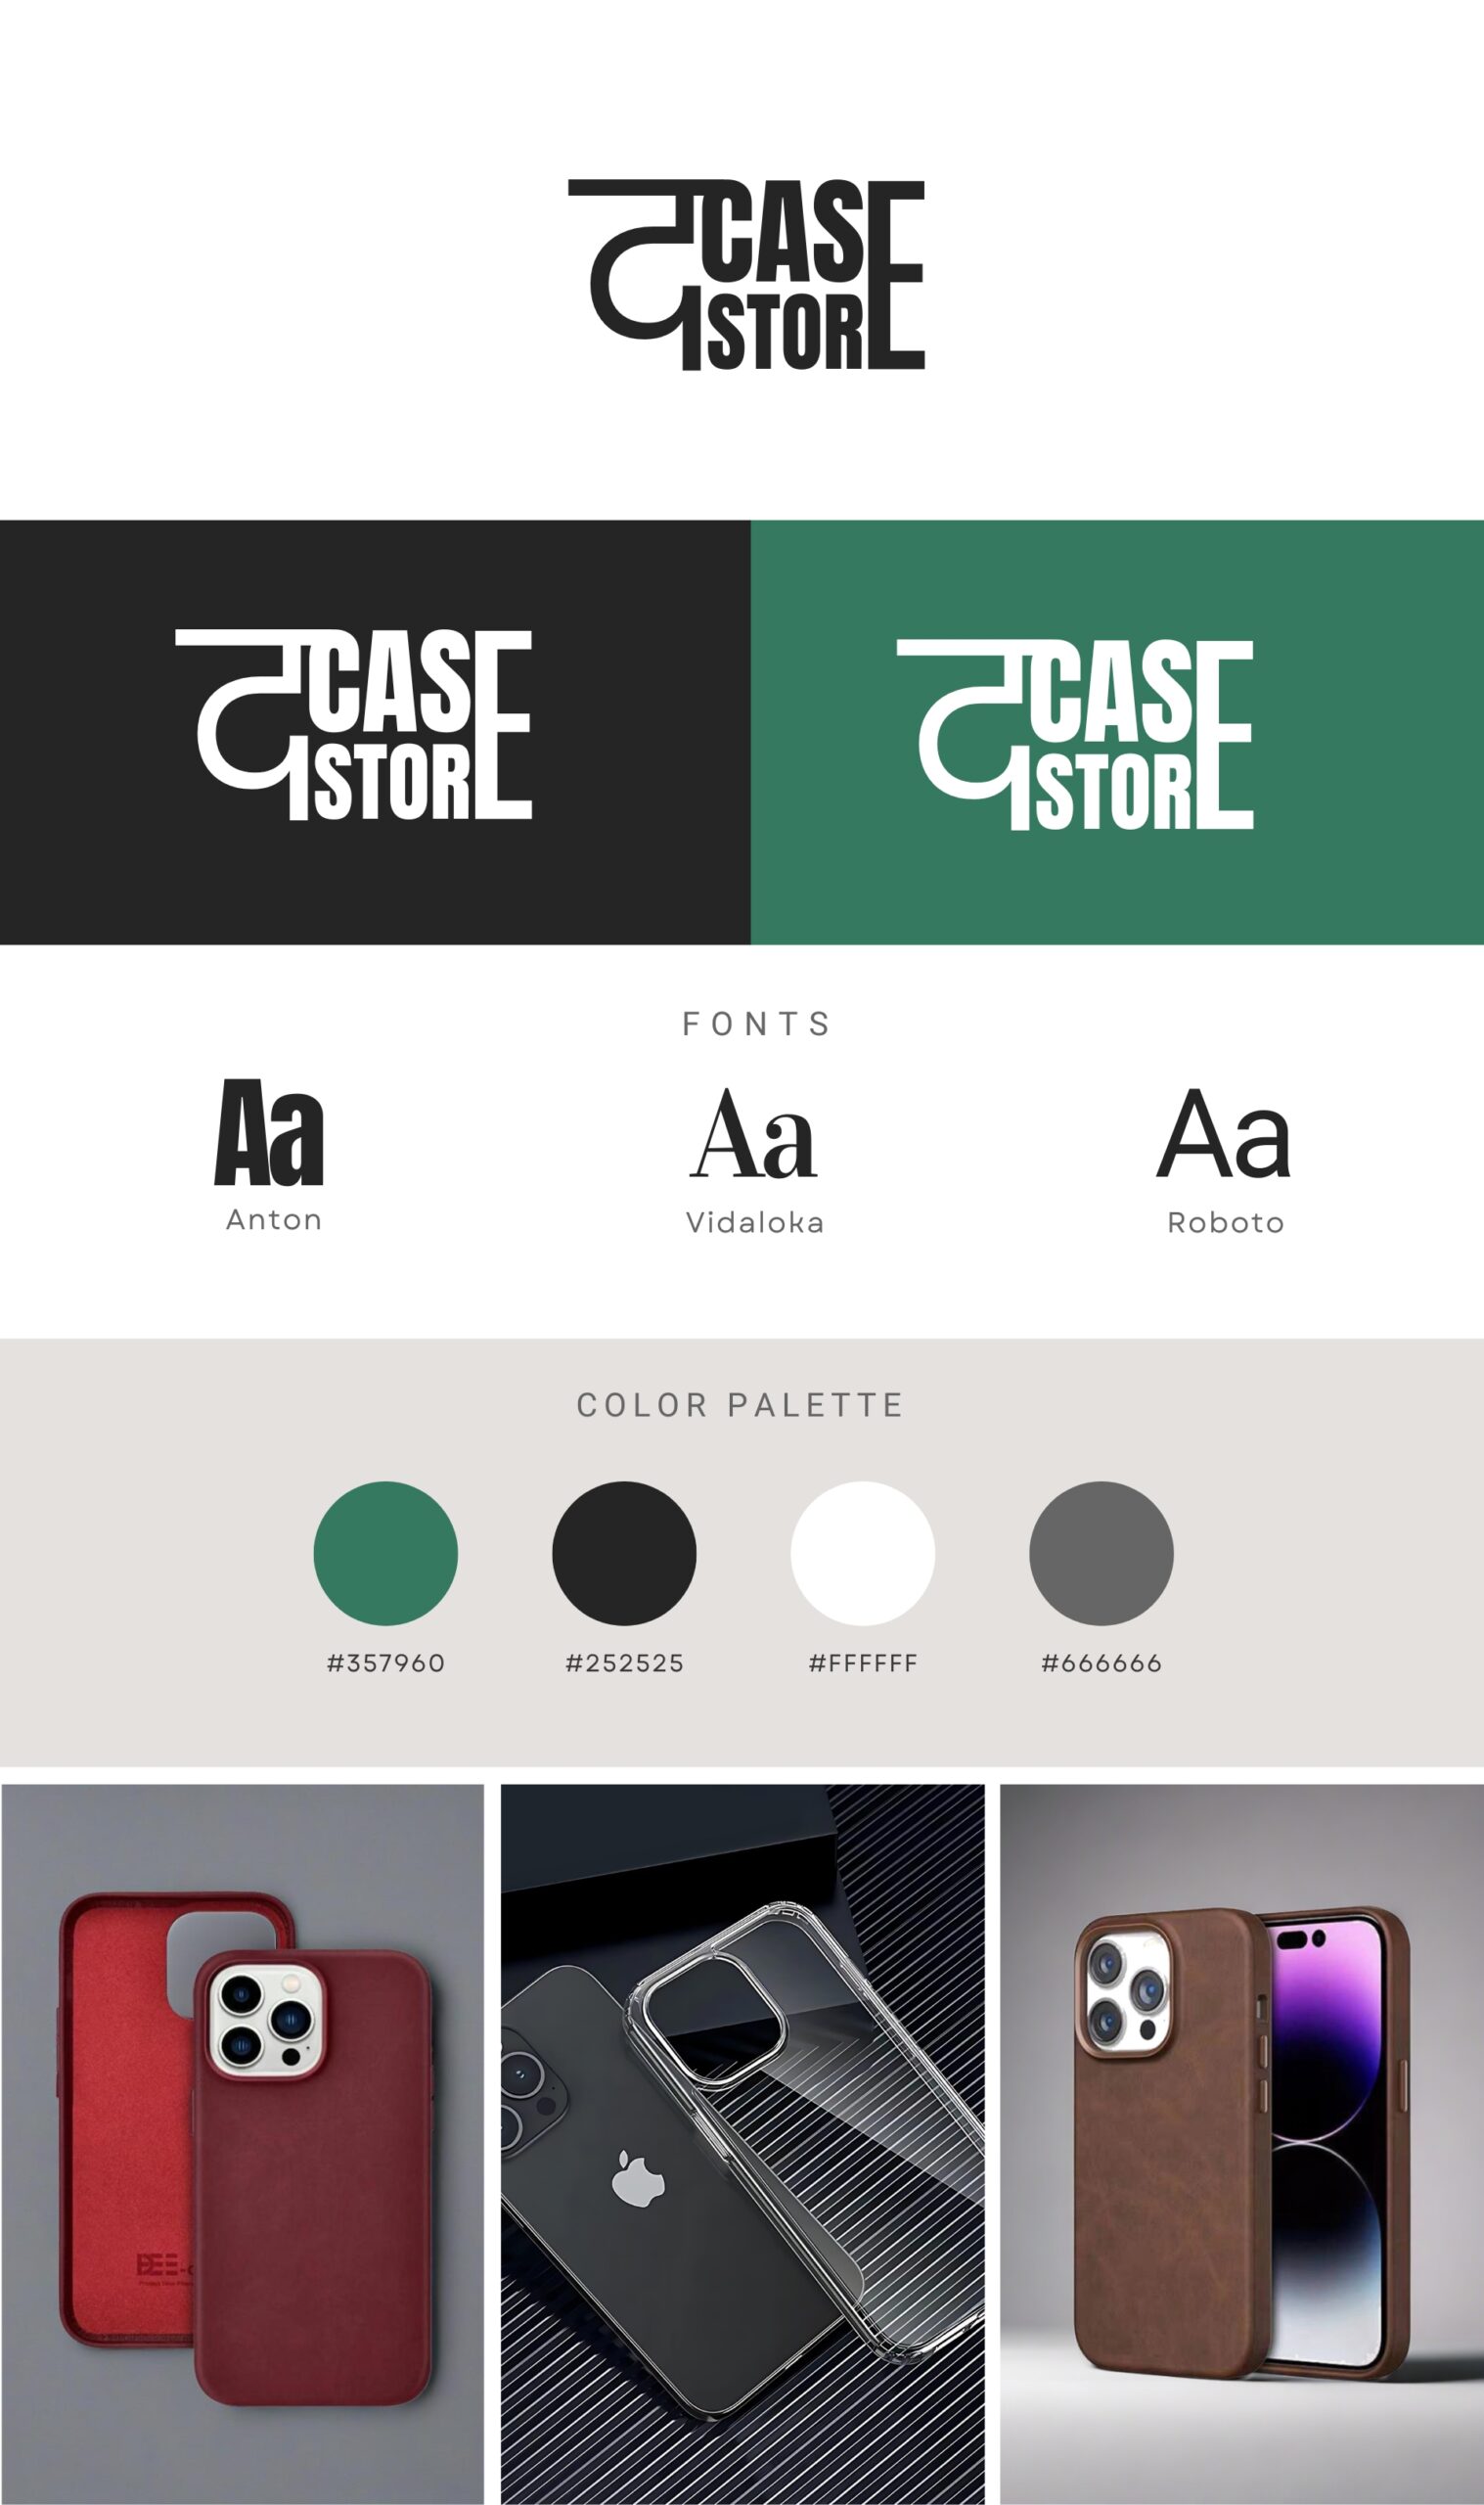 Brand Palette - The Case Store